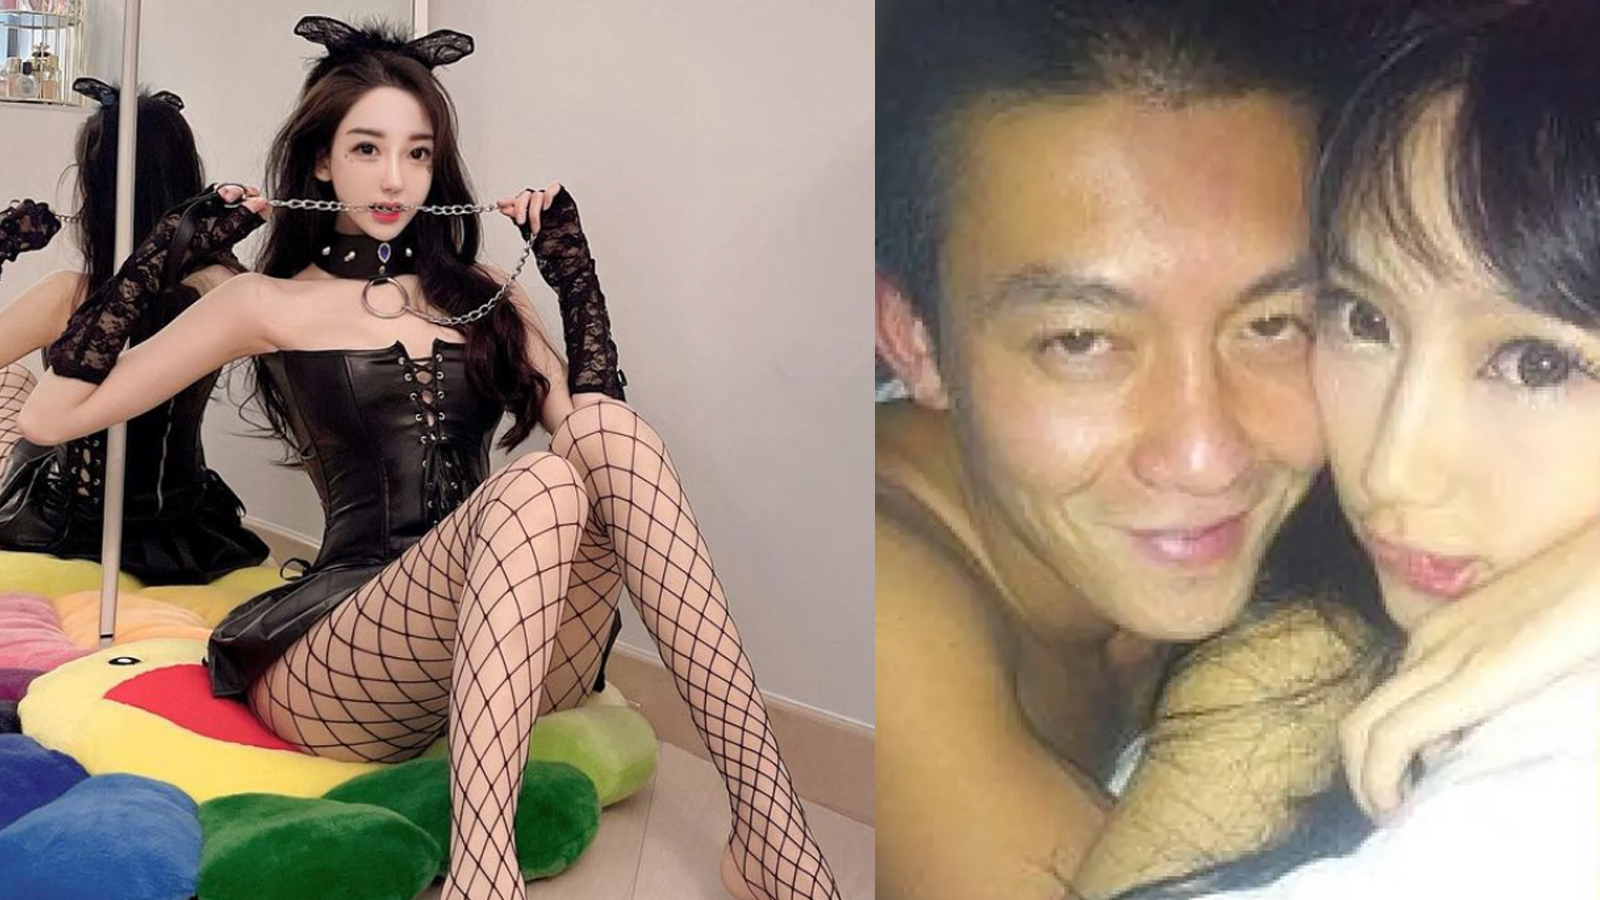 Asian Ex Girlfriend Pics on story